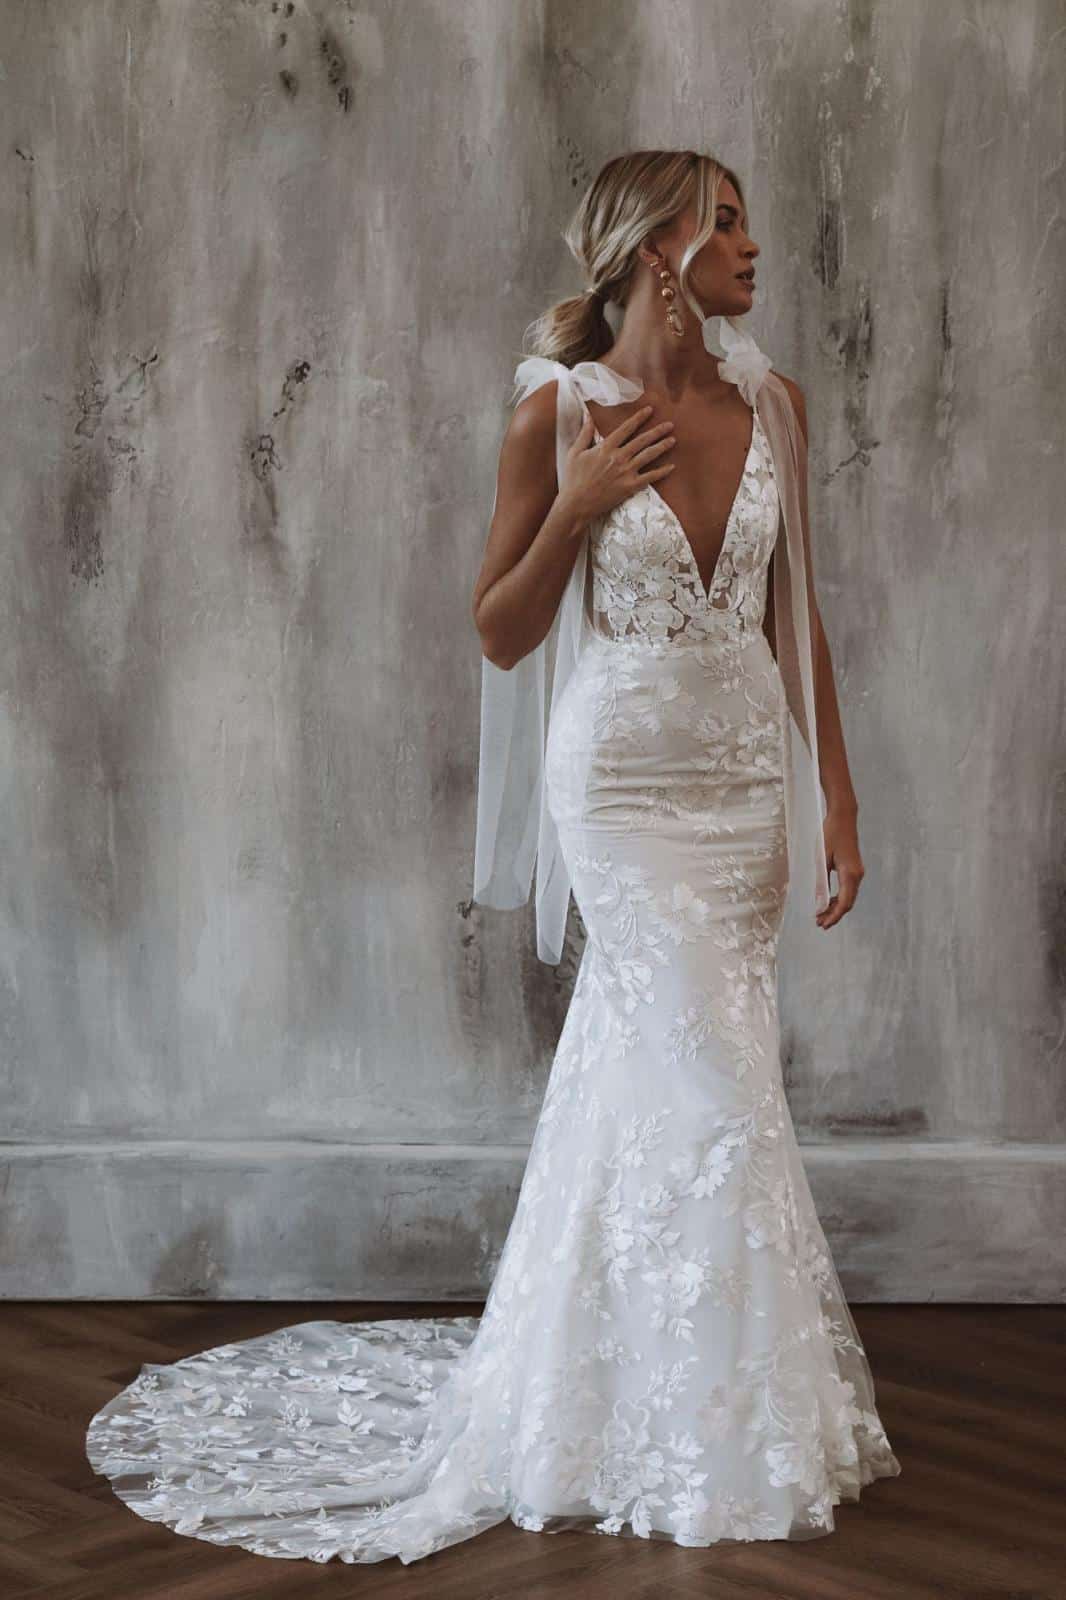 New Made With Love Wedding Dresses｜a&bé bridal shop